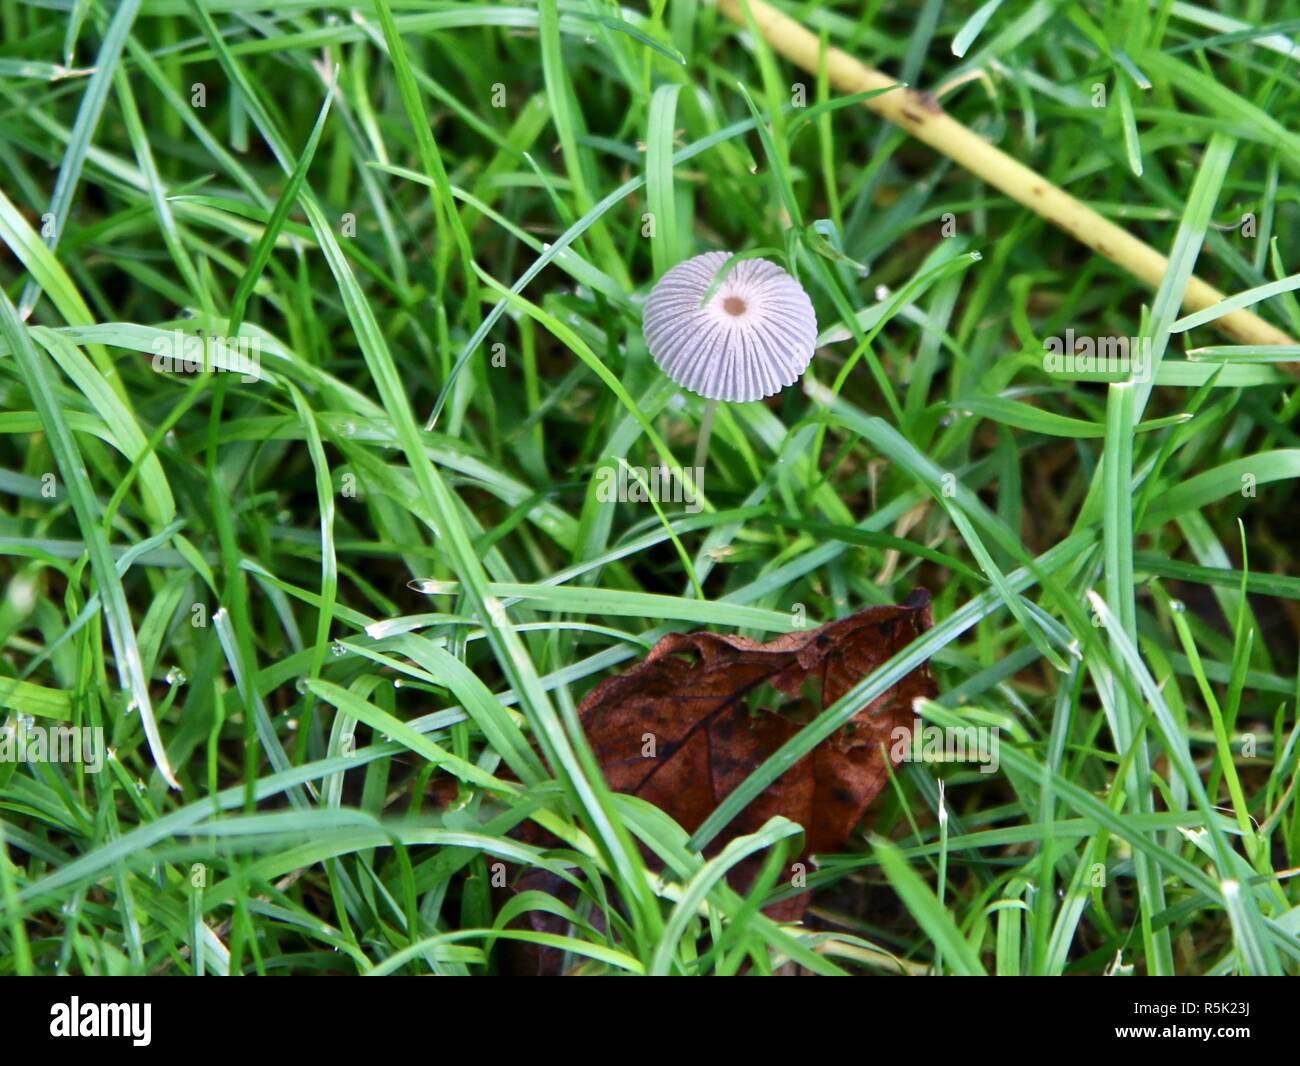 A tiny fragile white mushroom in green grass Stock Photo